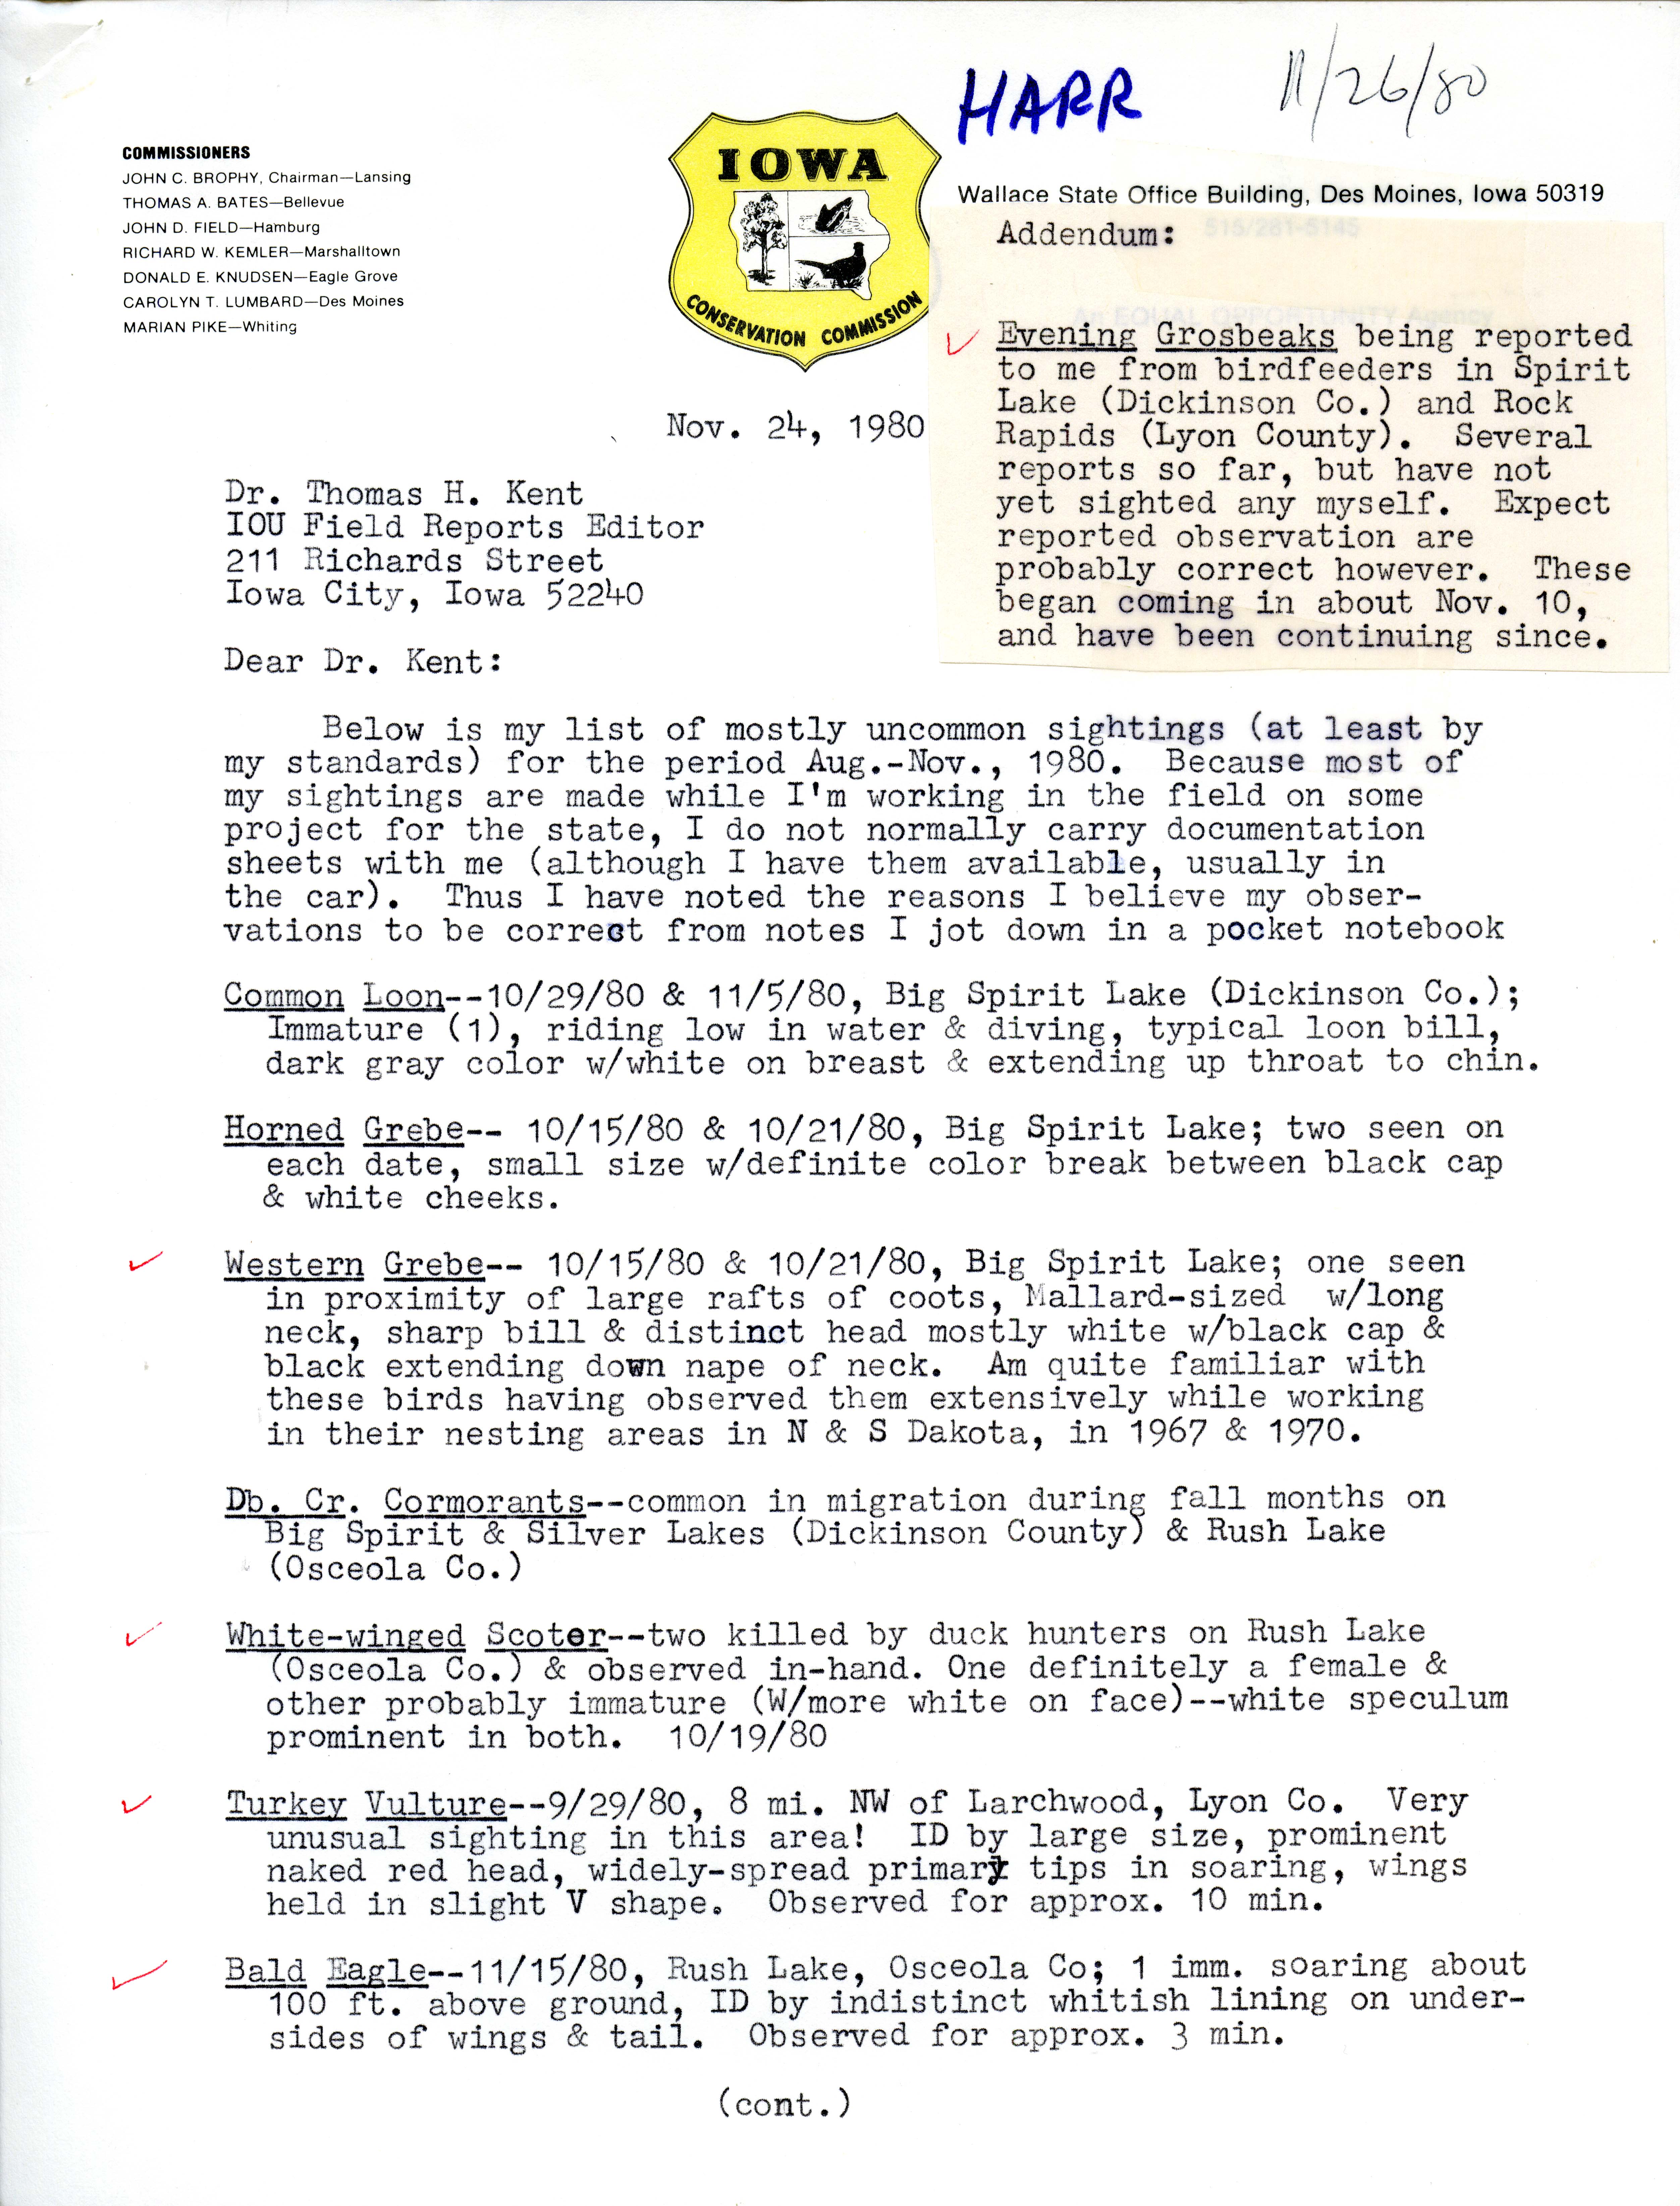 Doug Harr letter to Thomas Kent regarding uncommon birds sighted, November 24, 1980